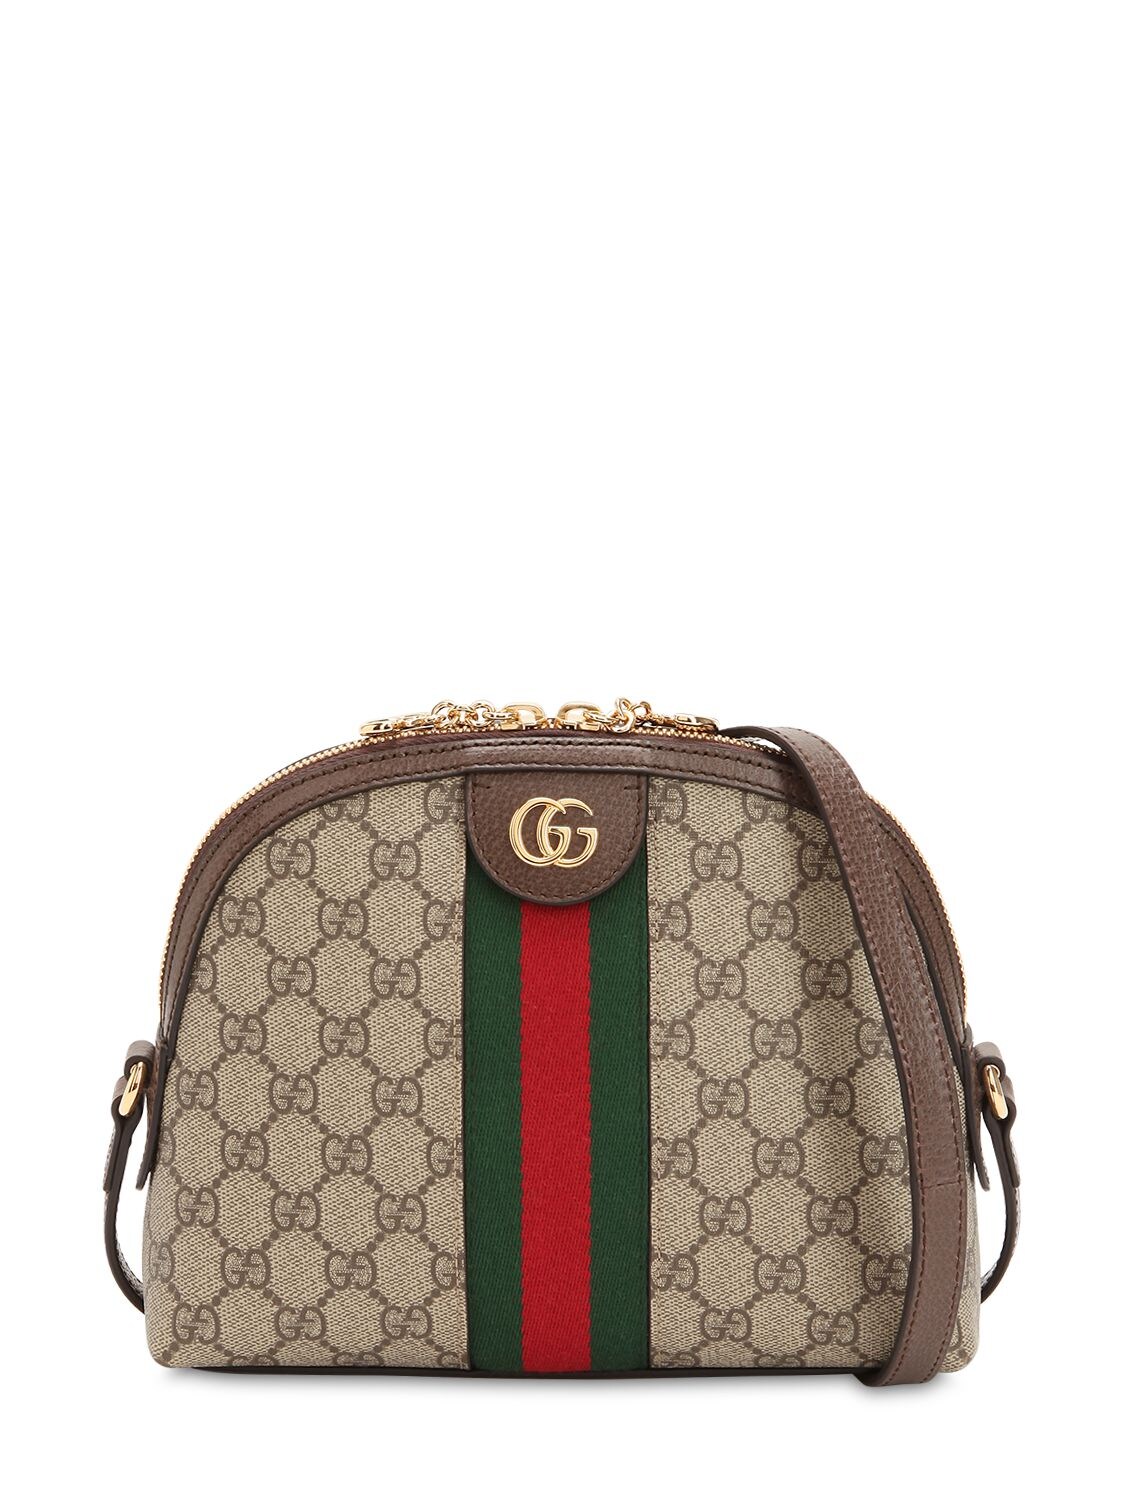 Gucci Ophidia Gg Supreme Shoulder Bag In Brown